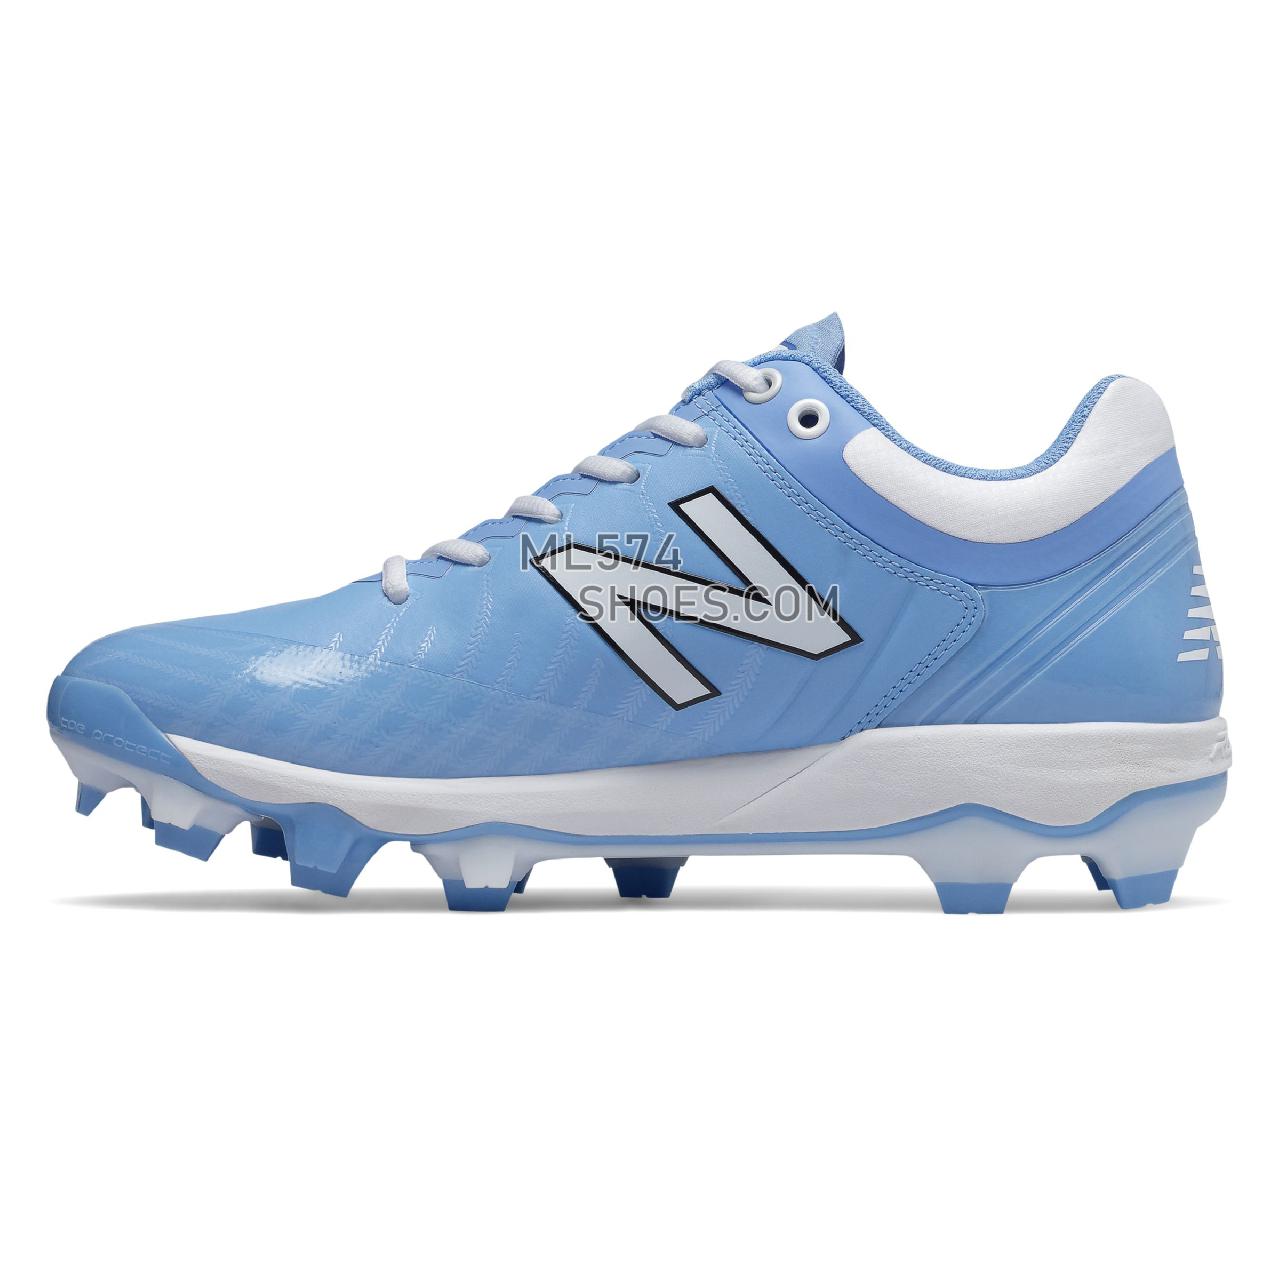 New Balance 4040v5 TPU - Men's Baseball Turf - Baby Blue with White - PL4040S5